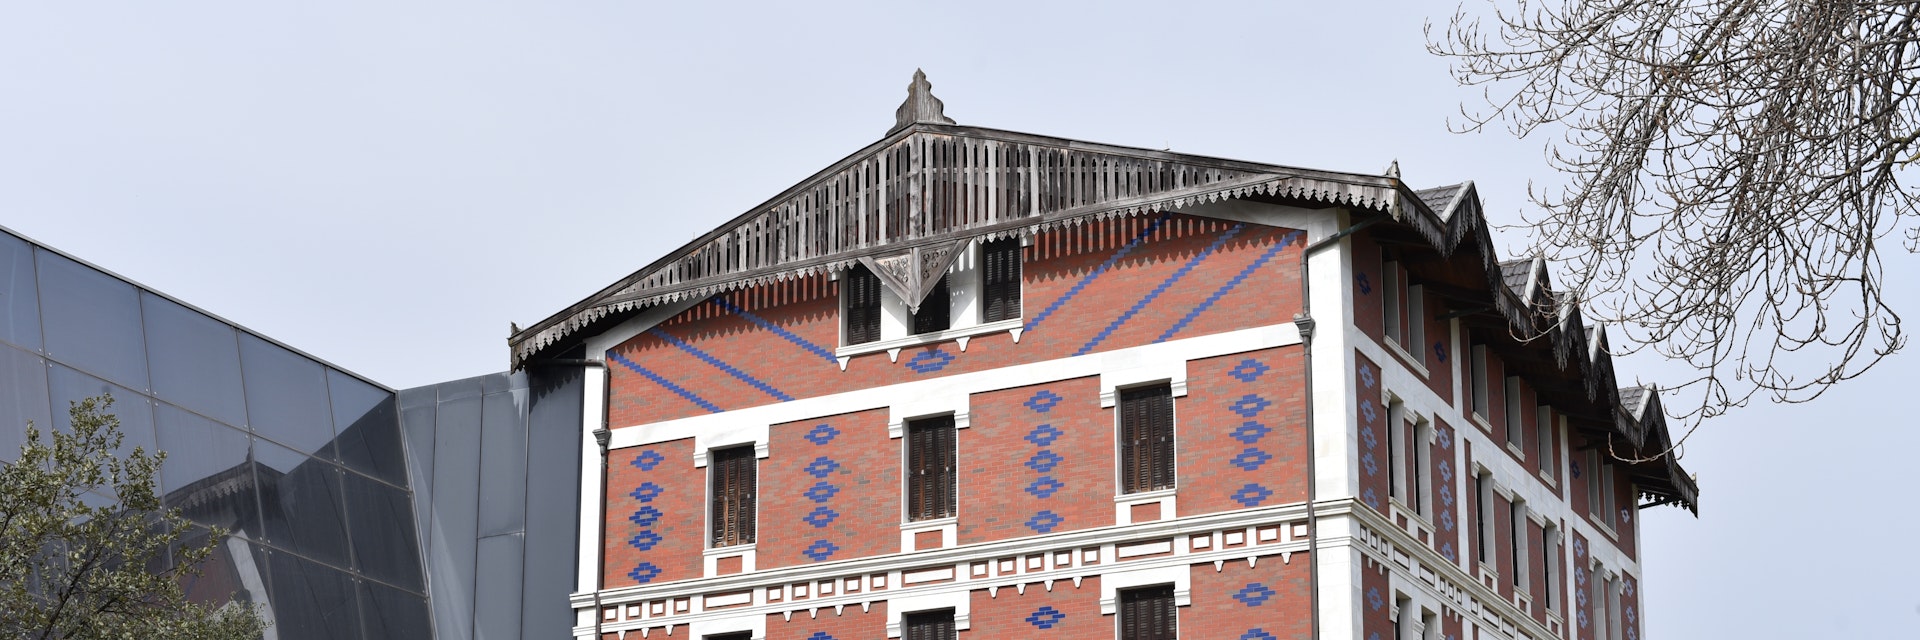 Exterior of the Balenciaga Museum in Getaria, Spain.